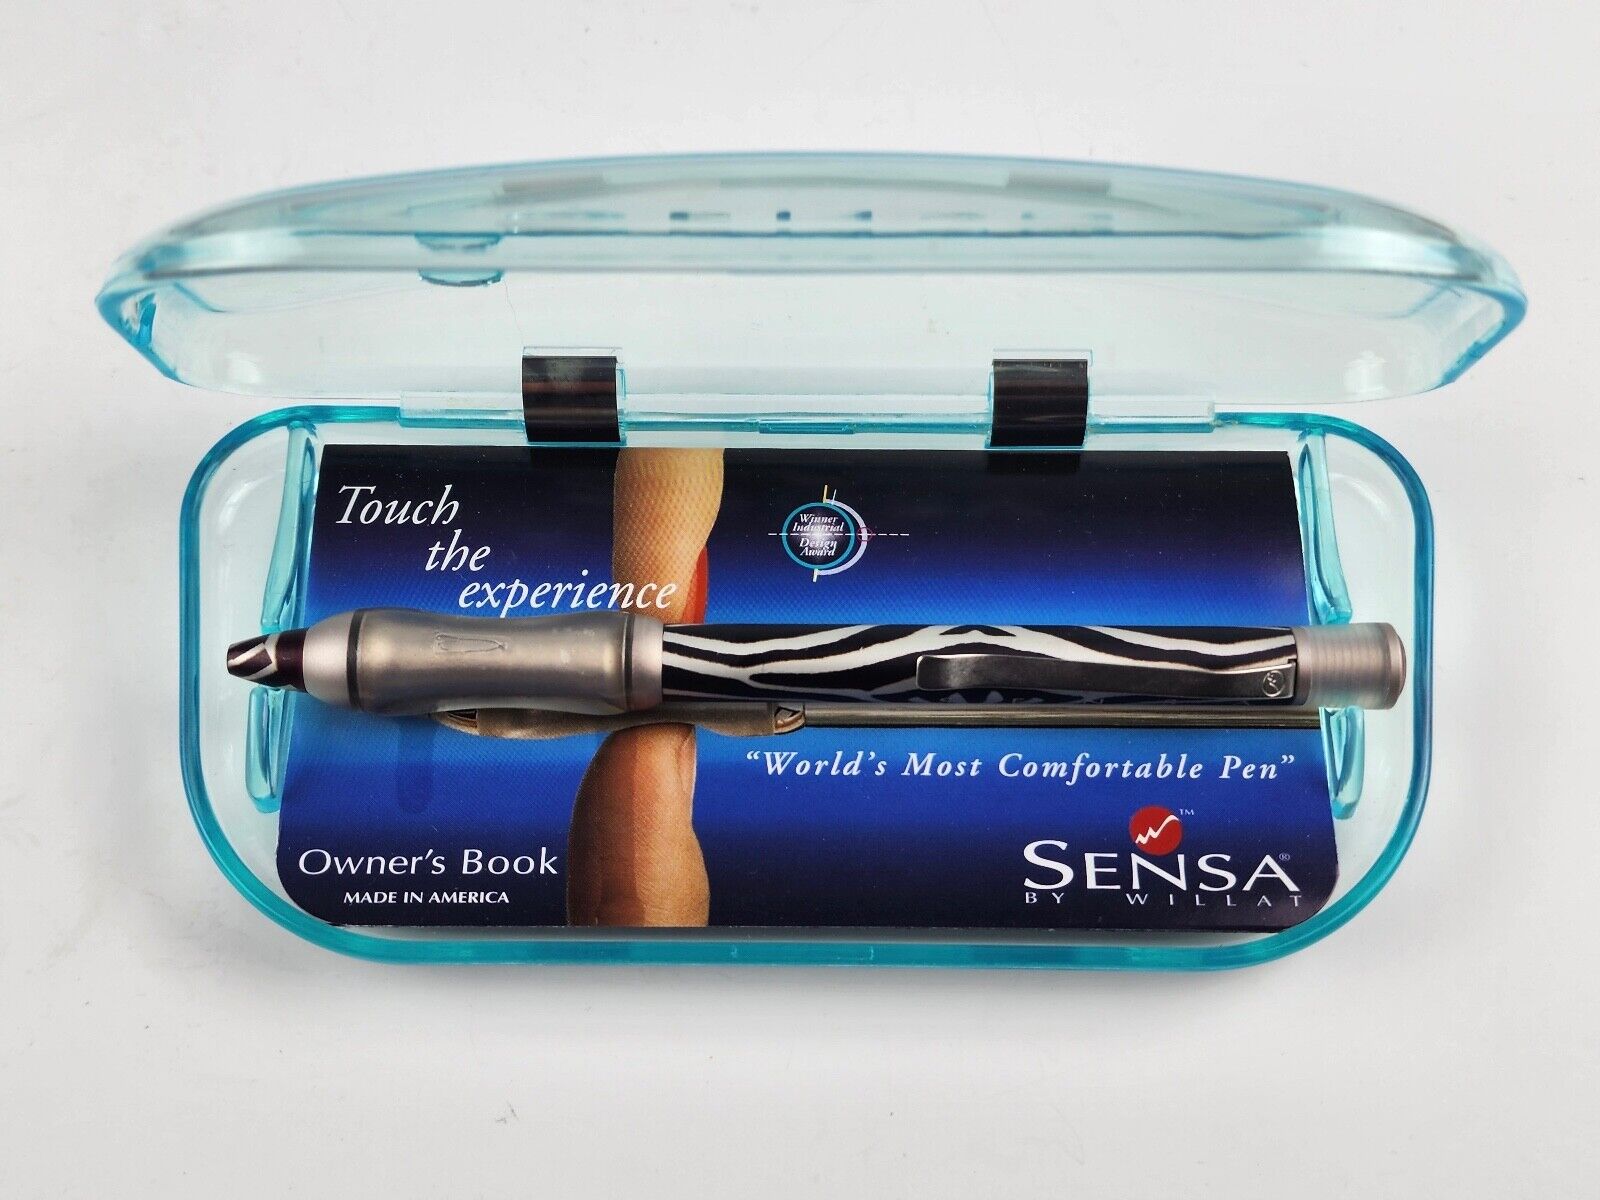 Sensa Wild Zebra Platinum Ballpoint Pen  Mint in package -rubber grip is sticky